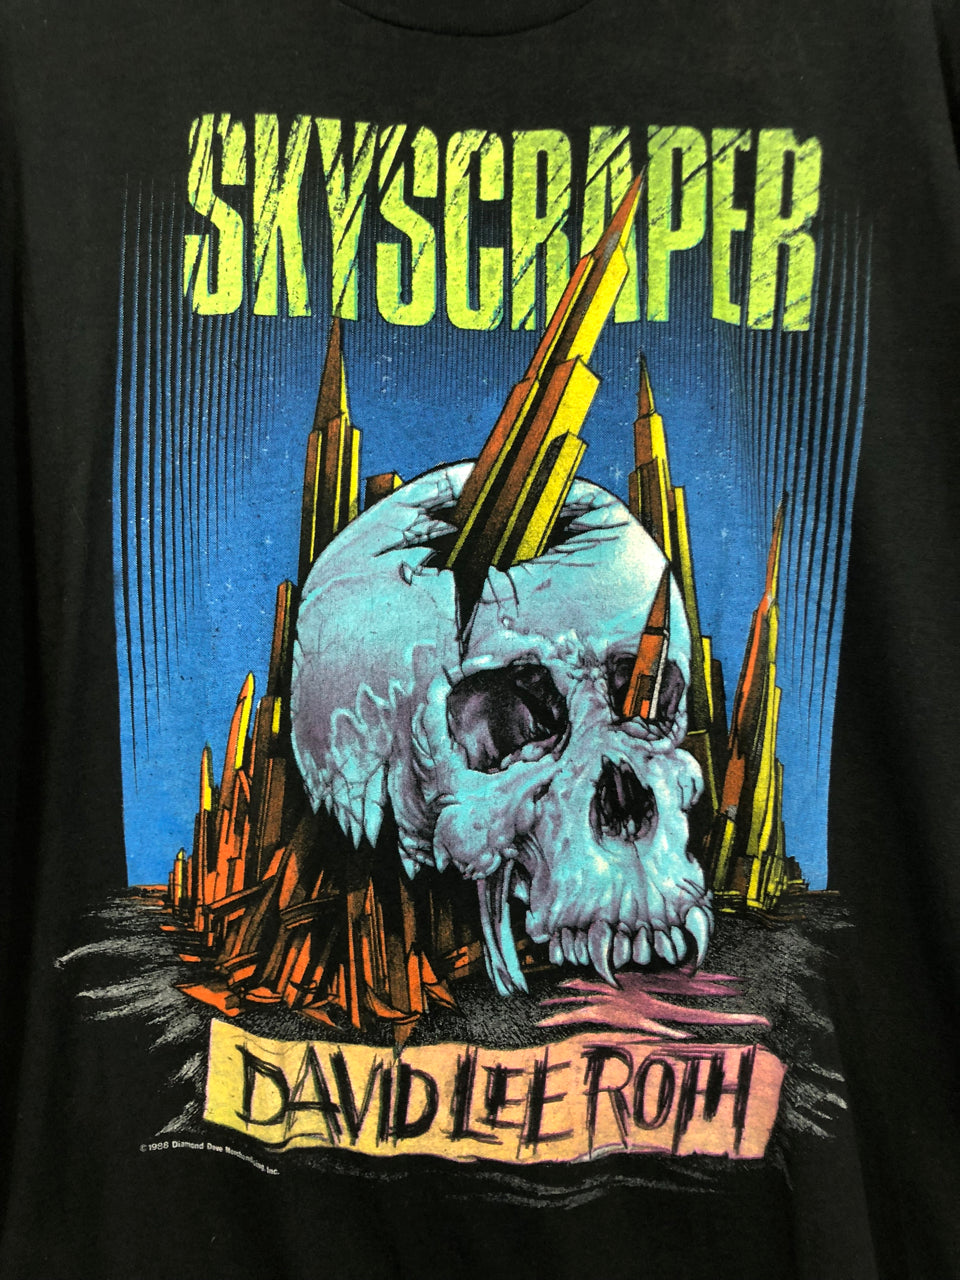 David Lee Roth Skyscraper World Tour '88 T-Shirt